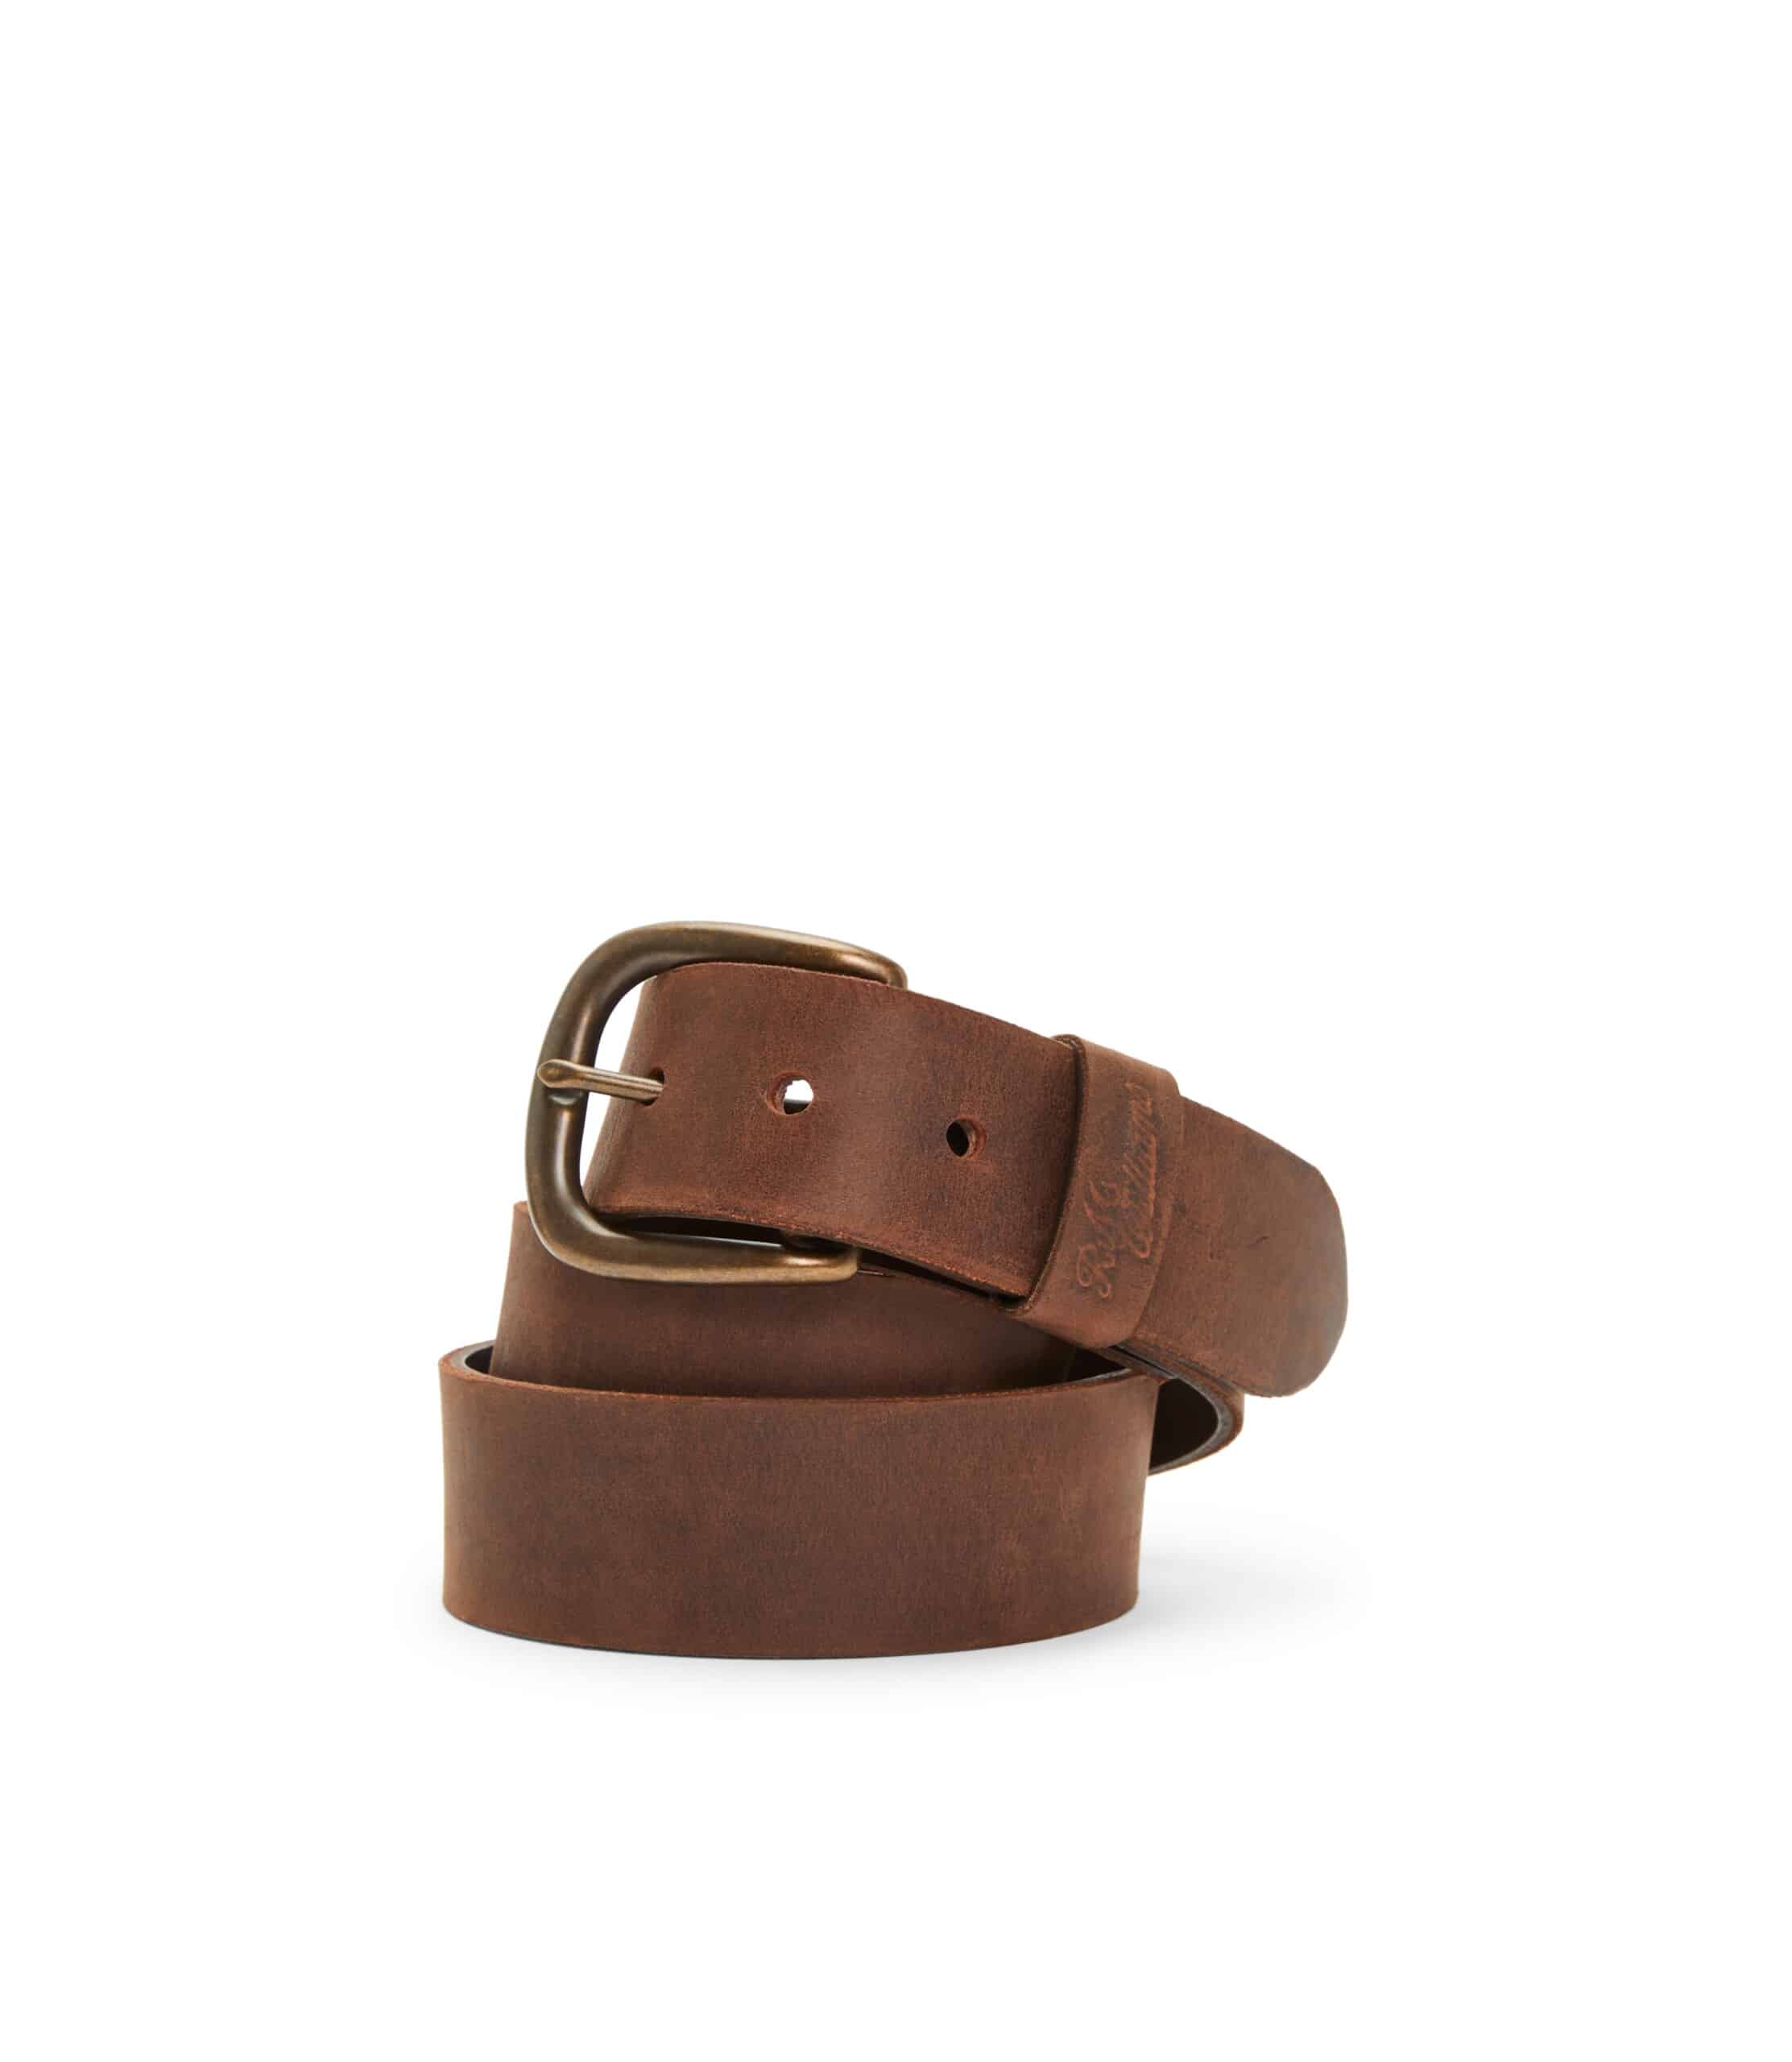 Goodwood belt in bark leather